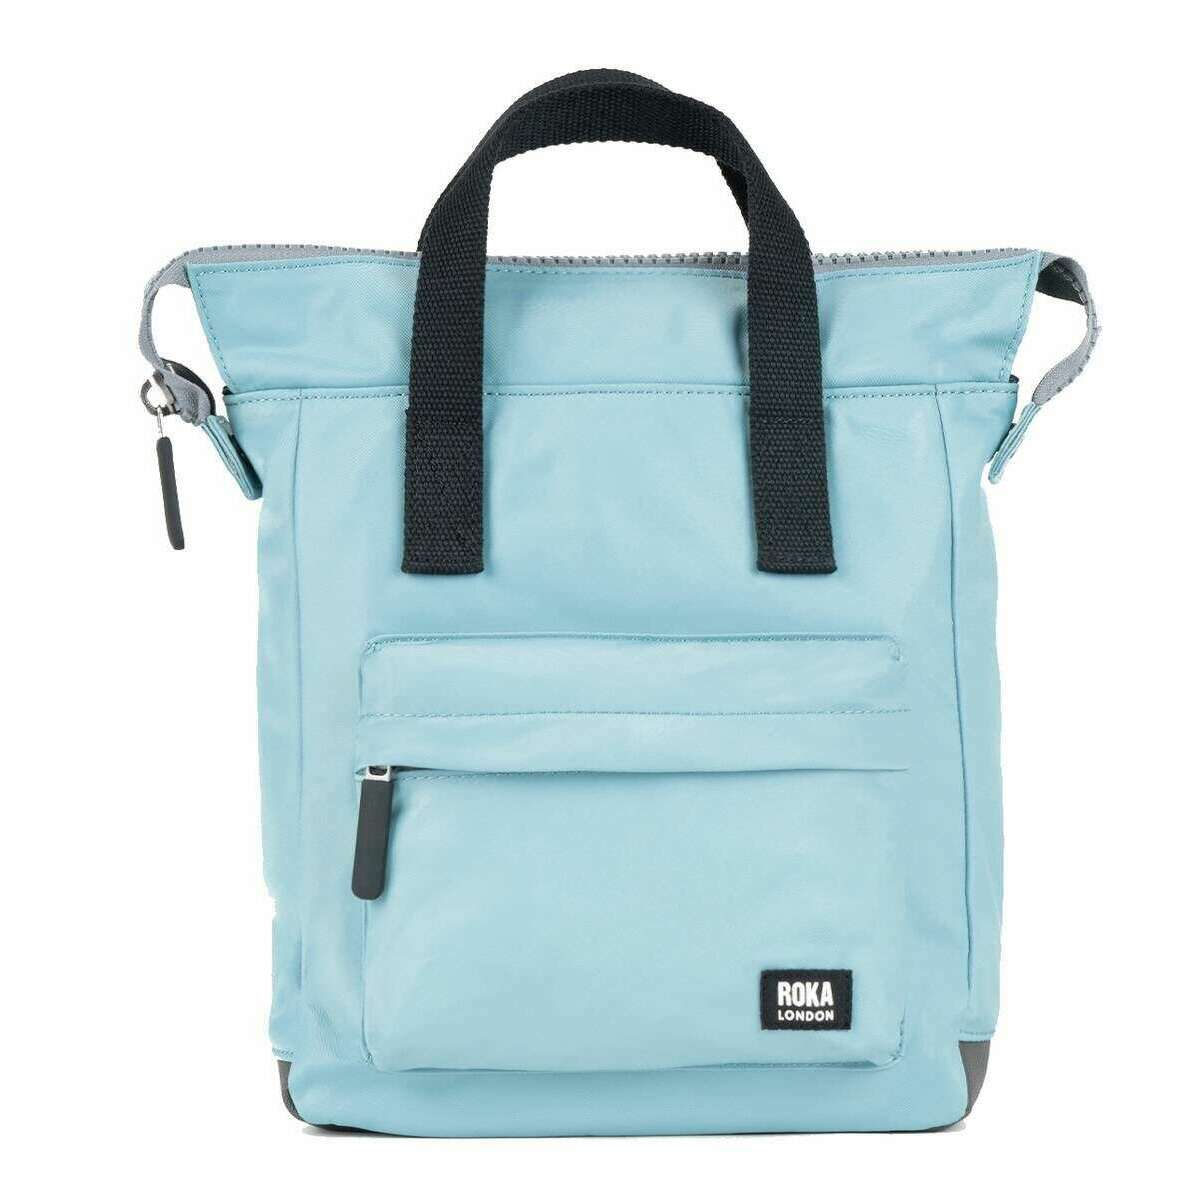 Roka Bantry B Small Black Label Recycled Nylon Backpack - Spearmint Blue